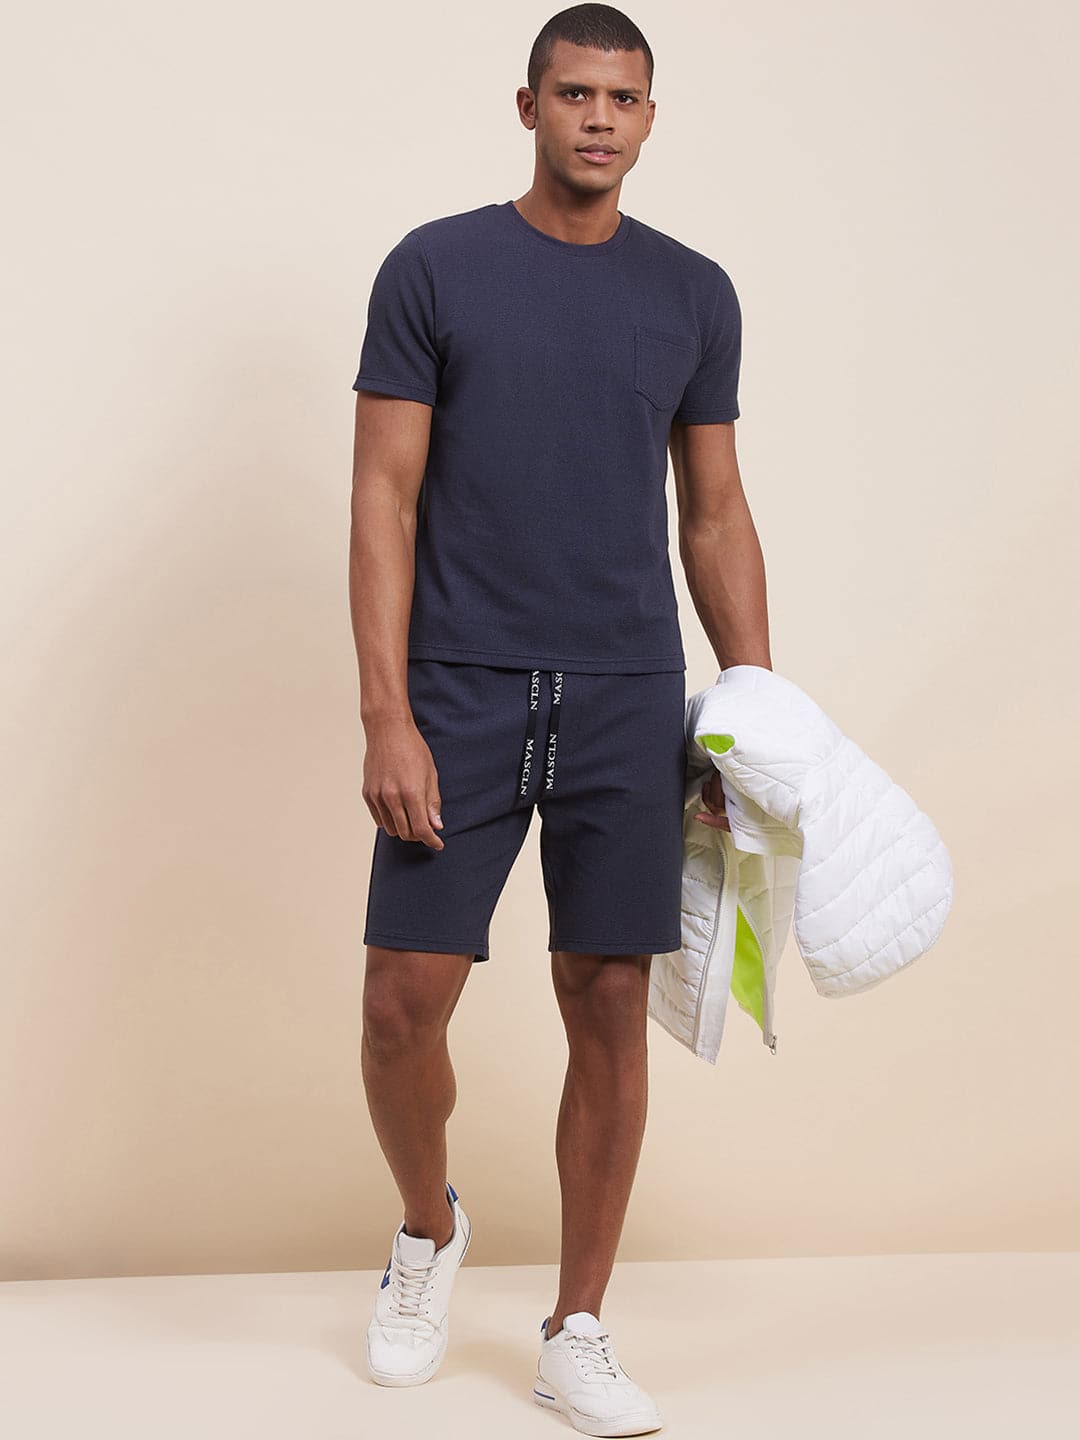 Men's Navy Slim Fit Pocket T-Shirt - LYUSH-MASCLN